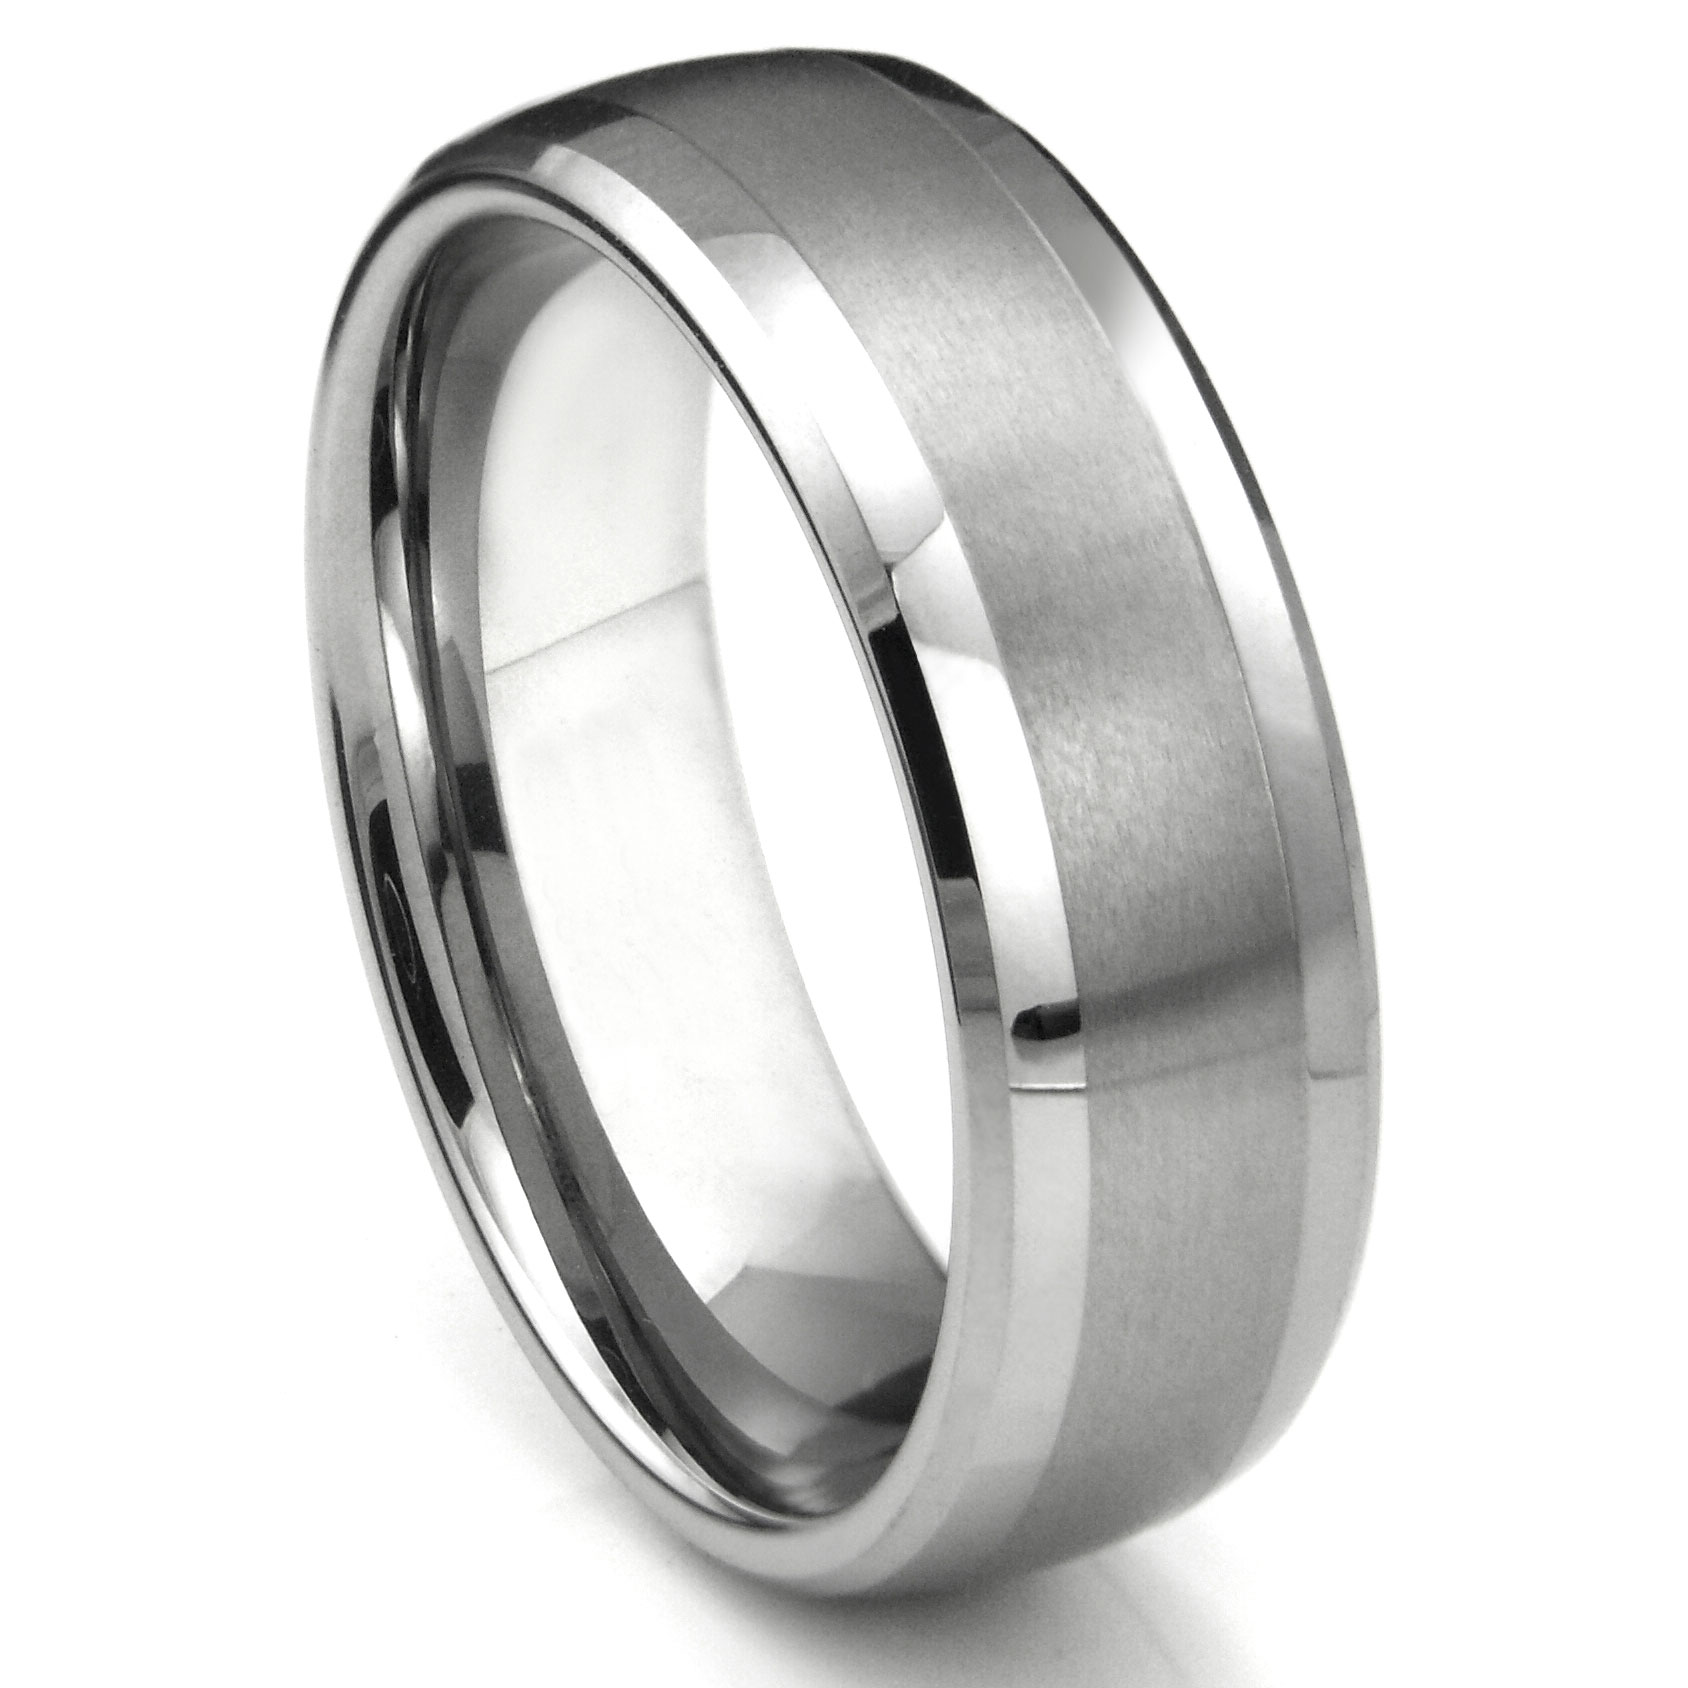 Tungsten Carbide Dome Matte Center Wedding Band Ring